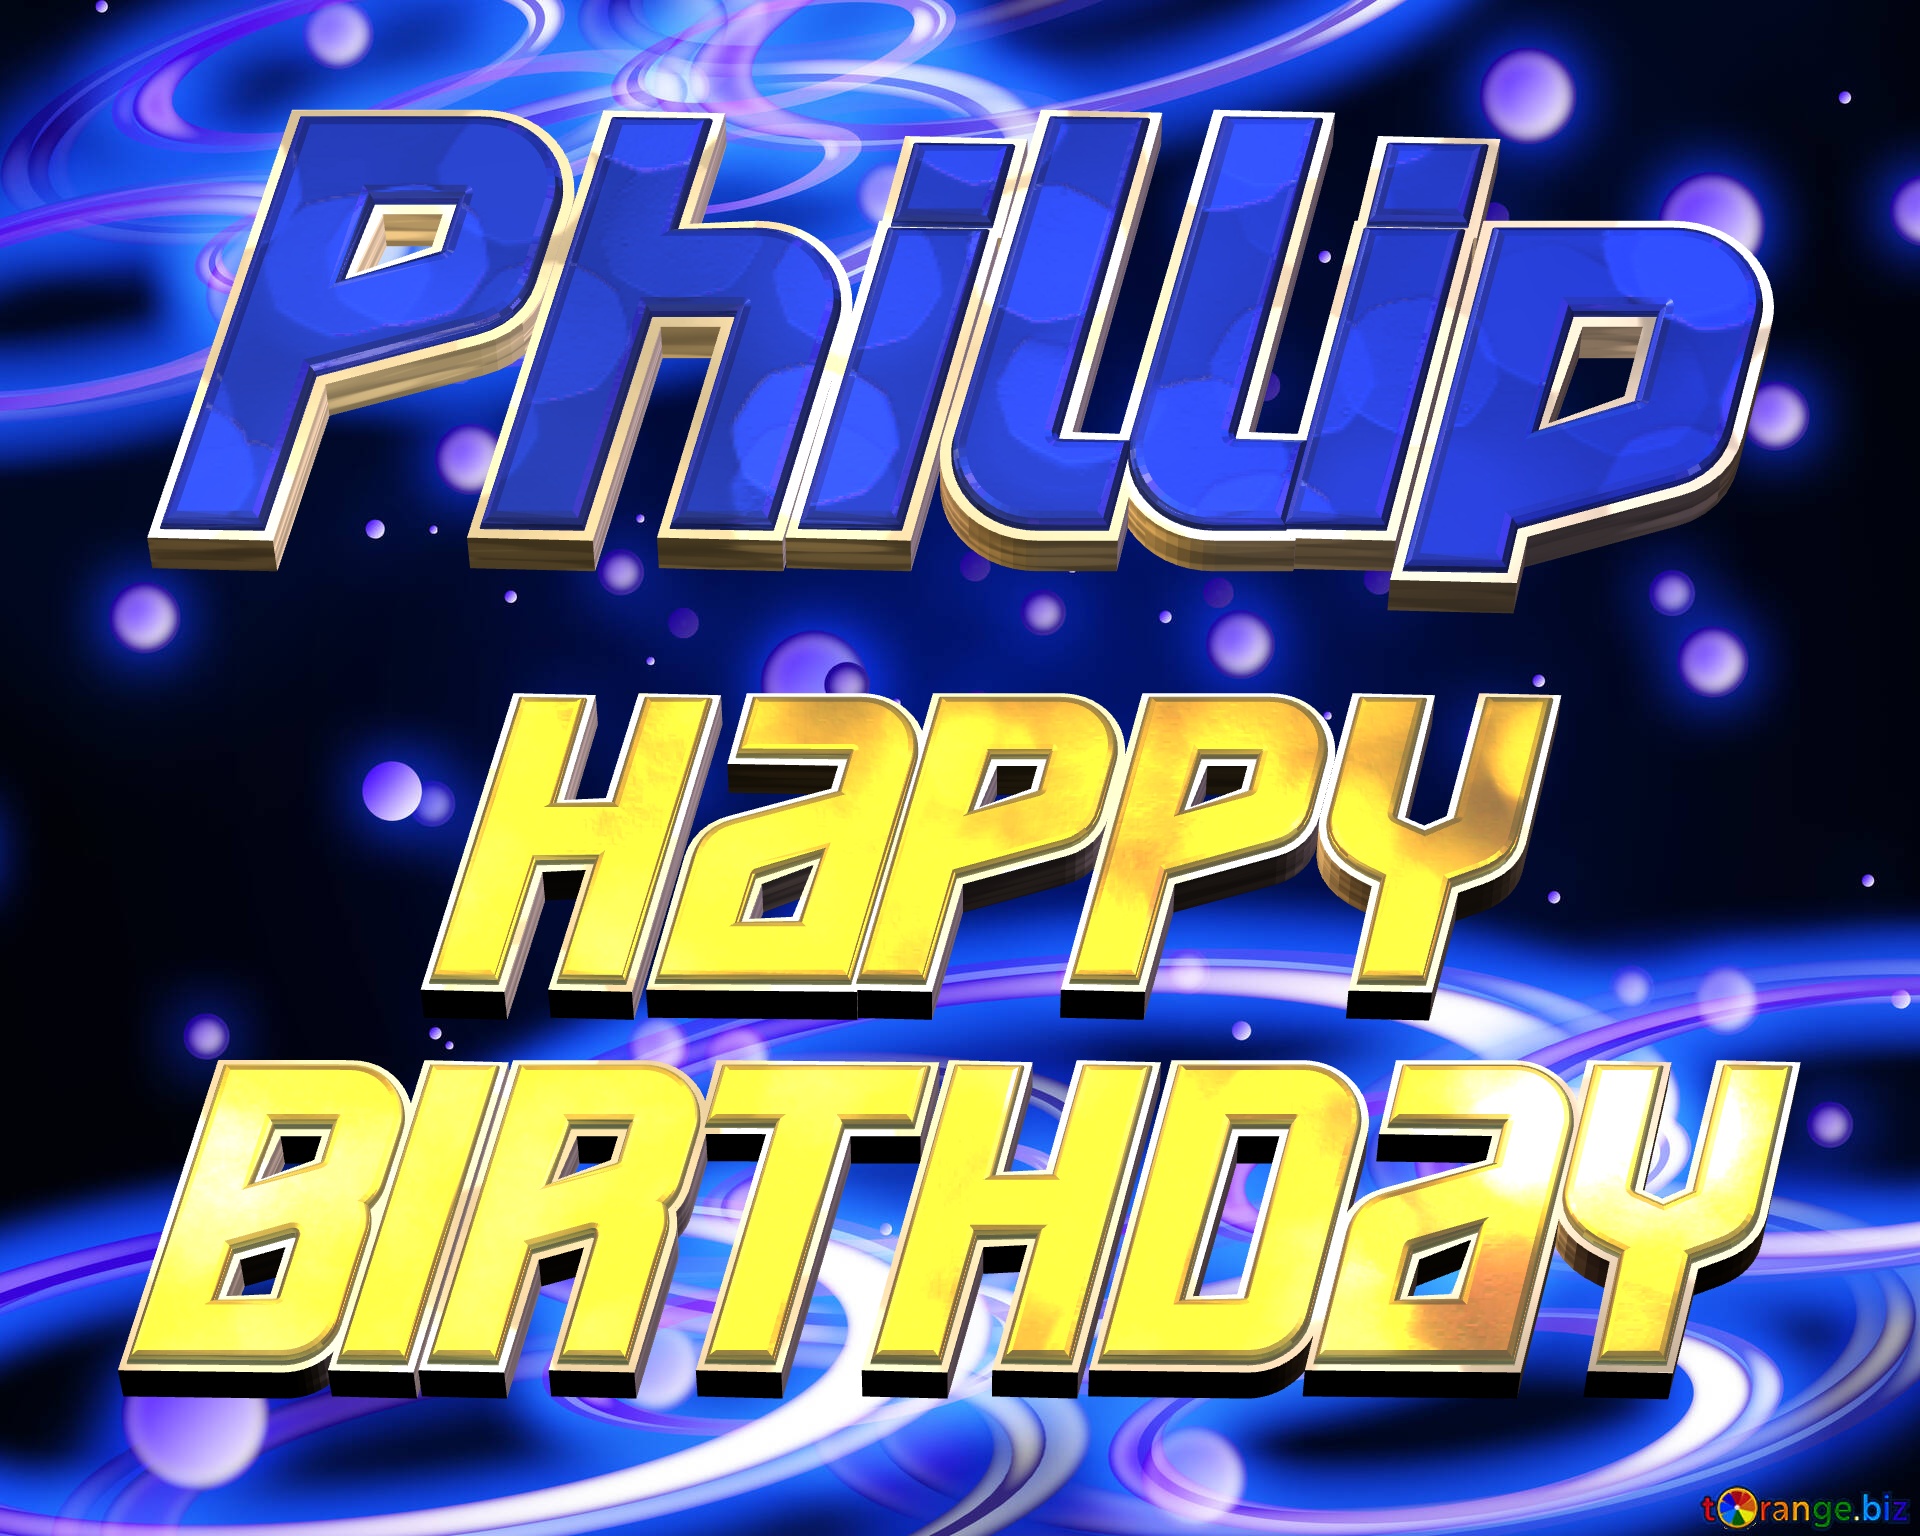 Phillip Space Happy Birthday! Technology background №54919